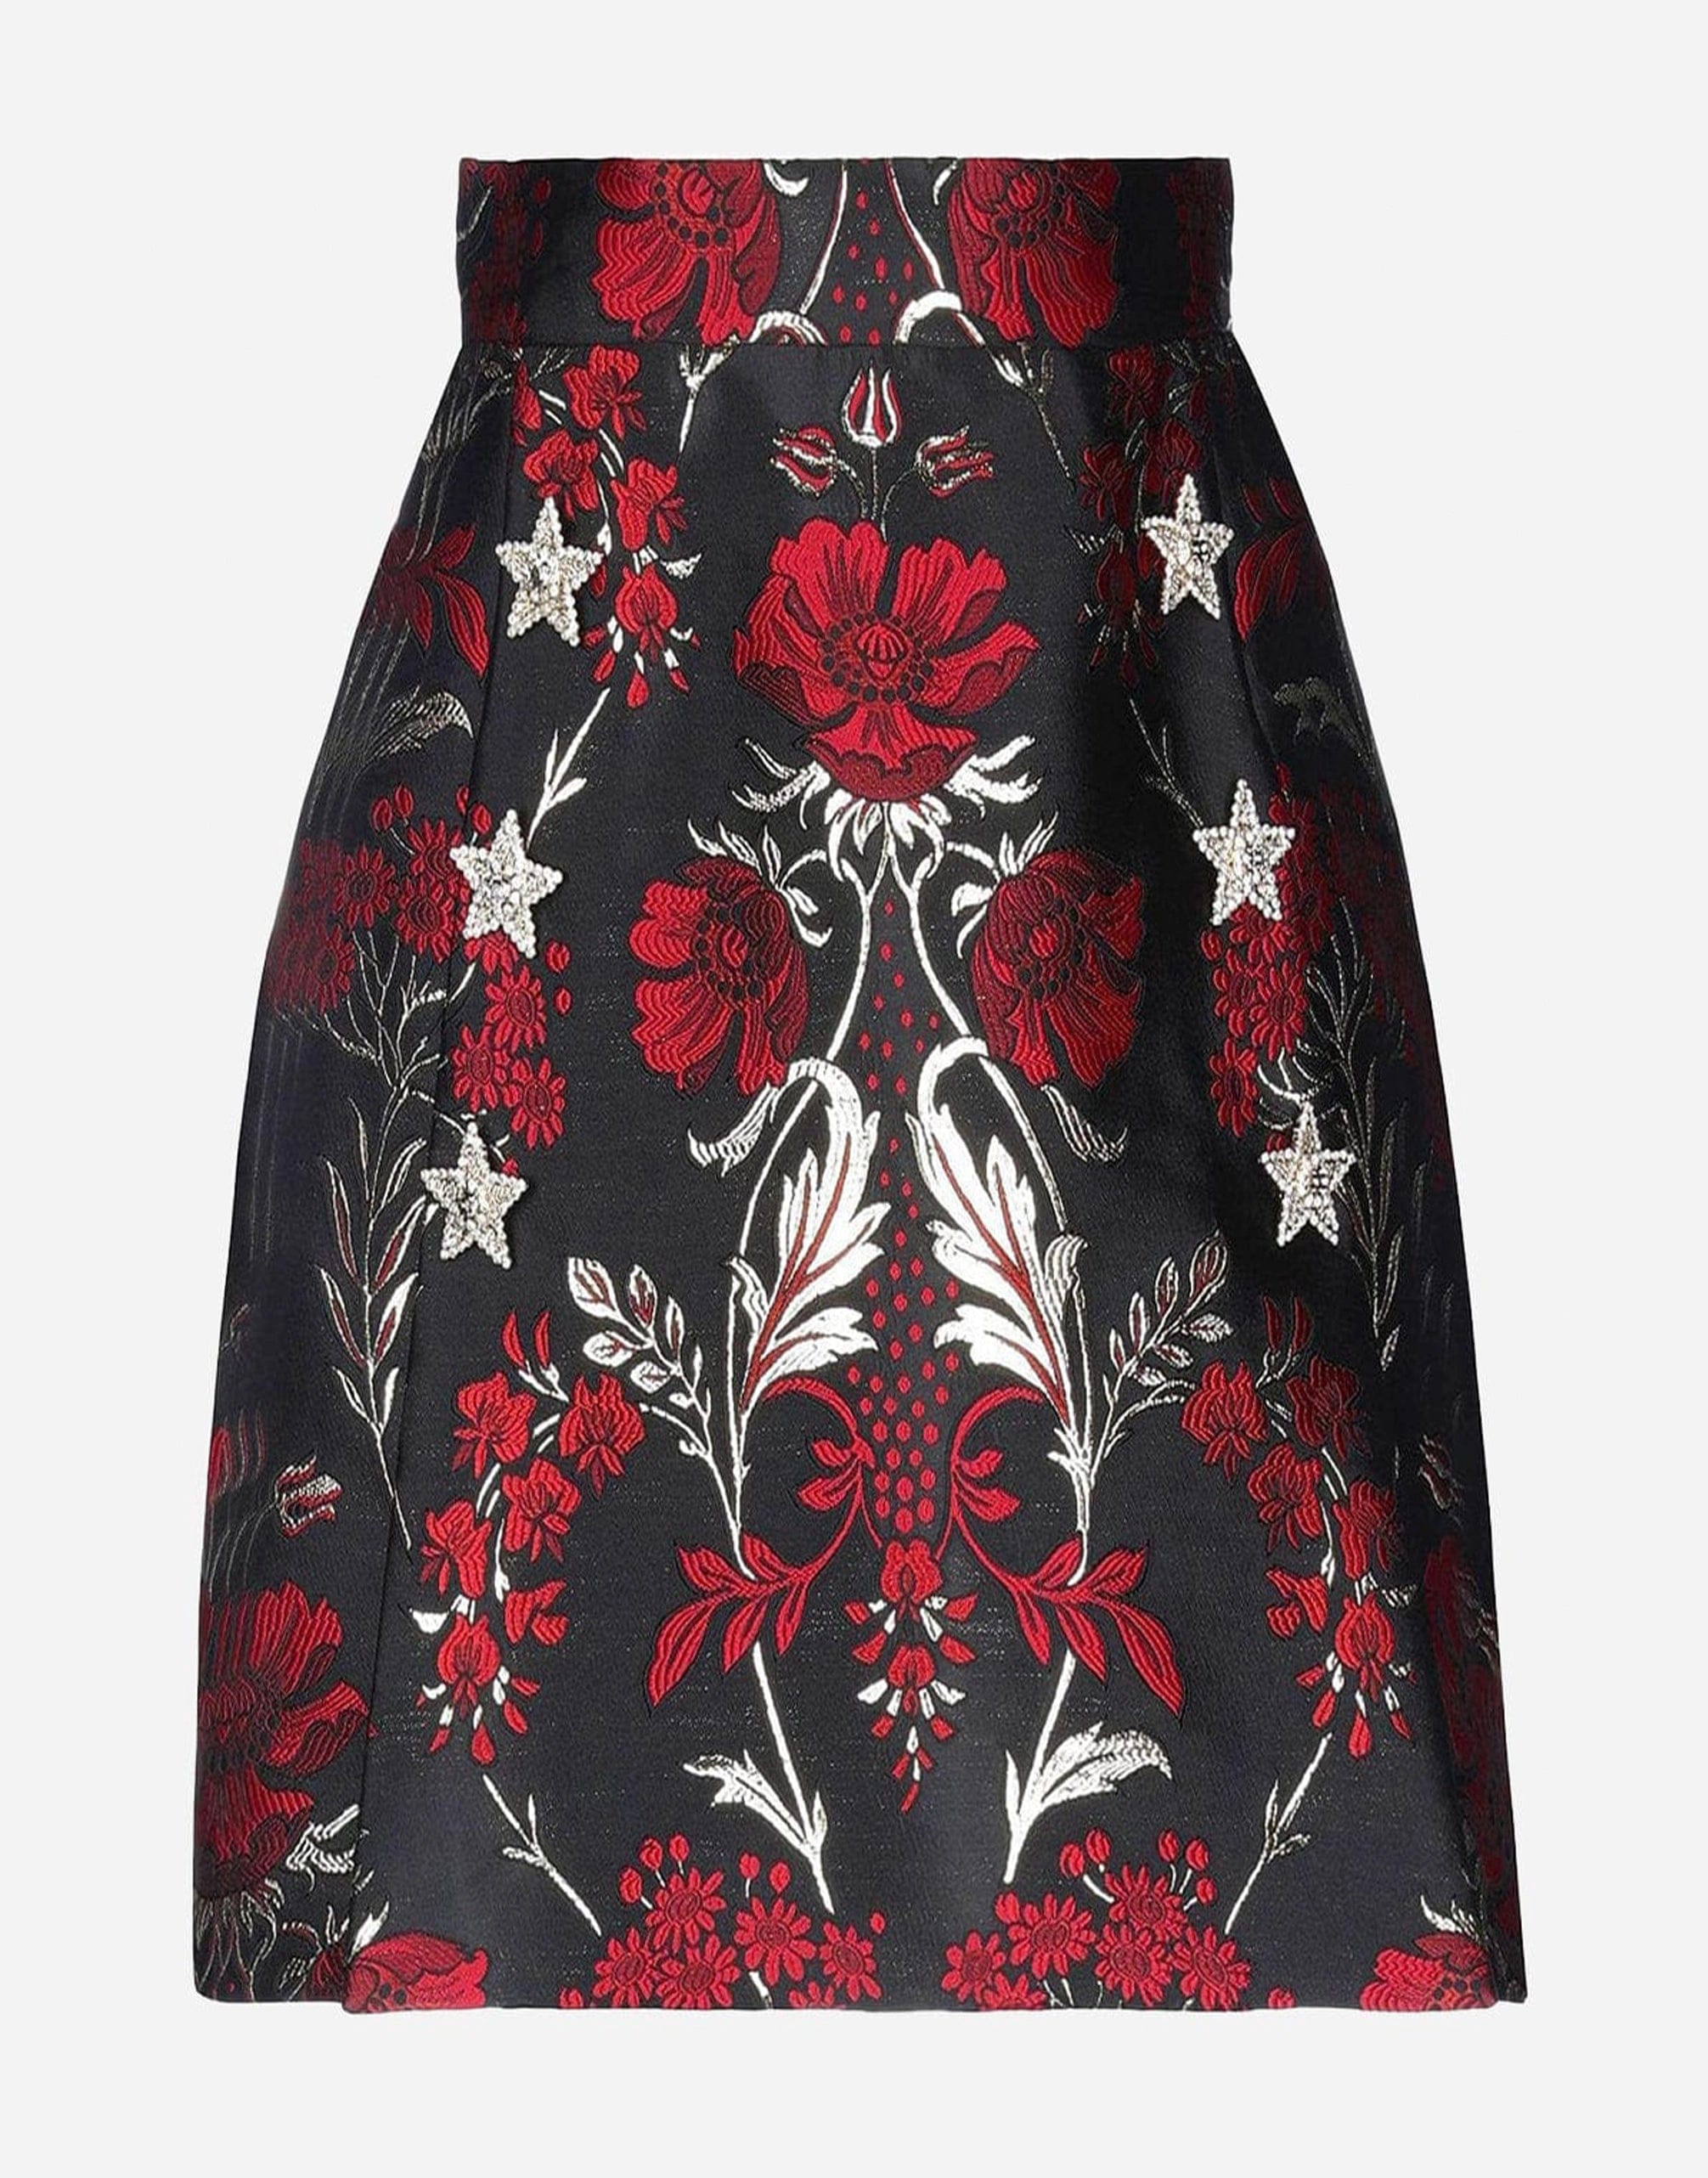 Dolce & Gabbana Jacquard Floral Mini Skirt